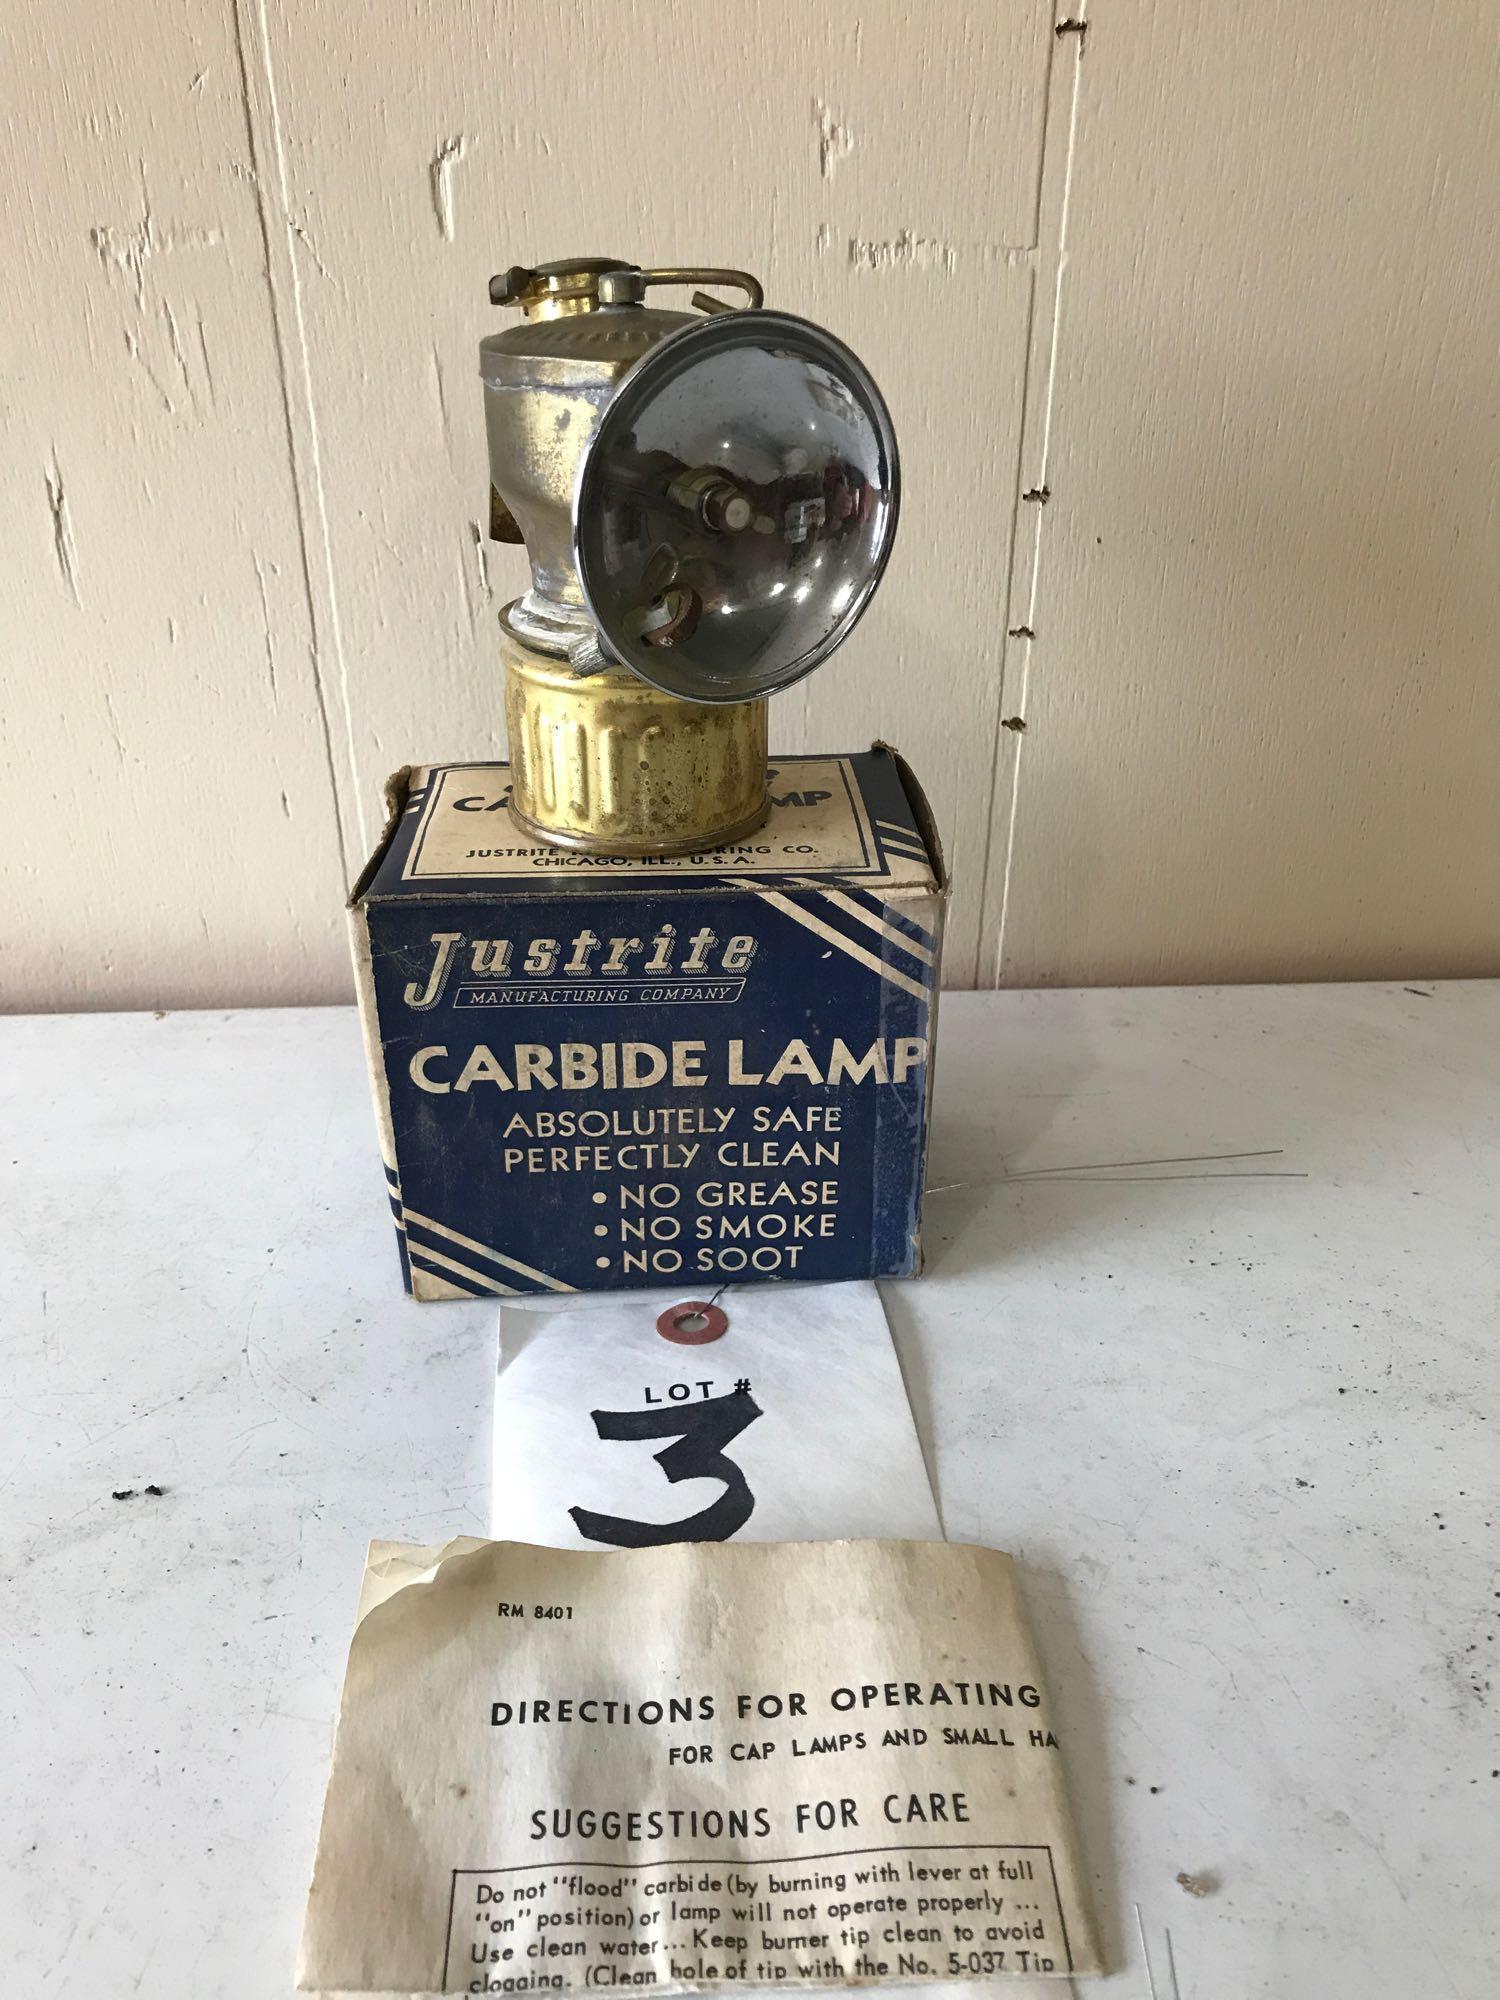 Justrite carbide lamp in original box